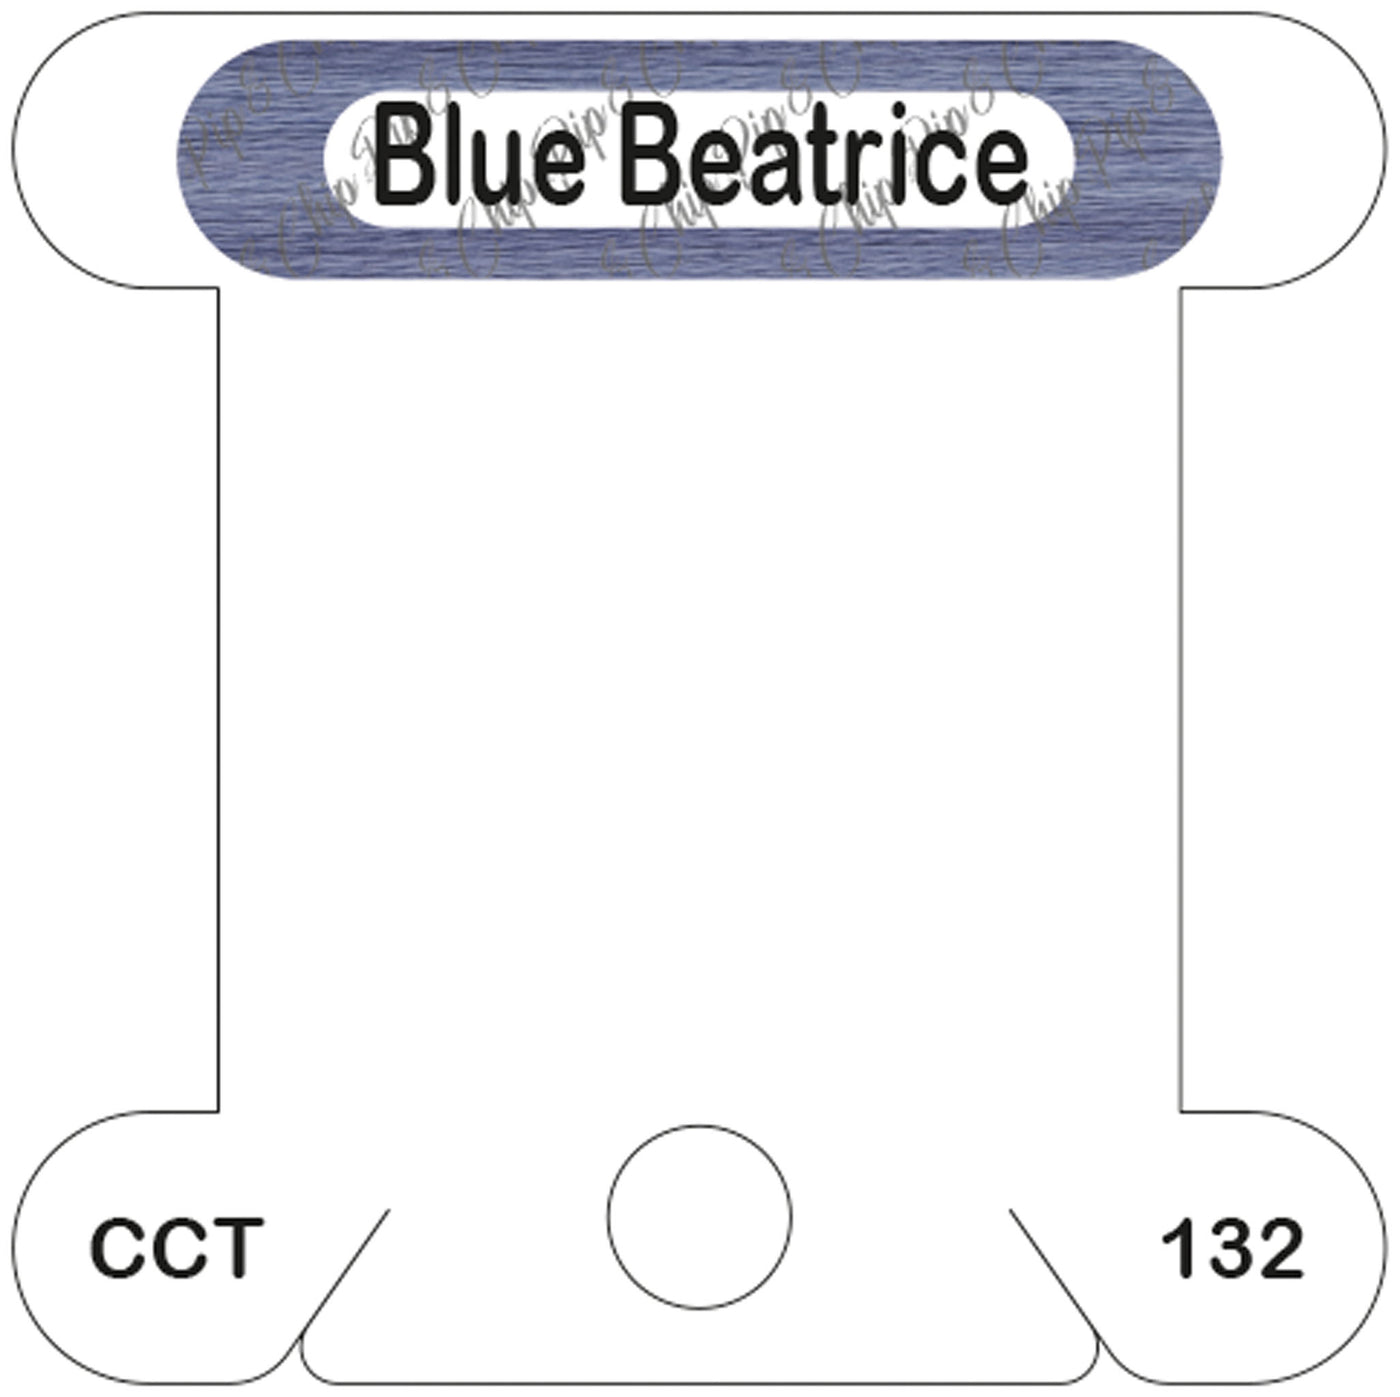 Classic Colorworks Blue Beatrice acrylic bobbin